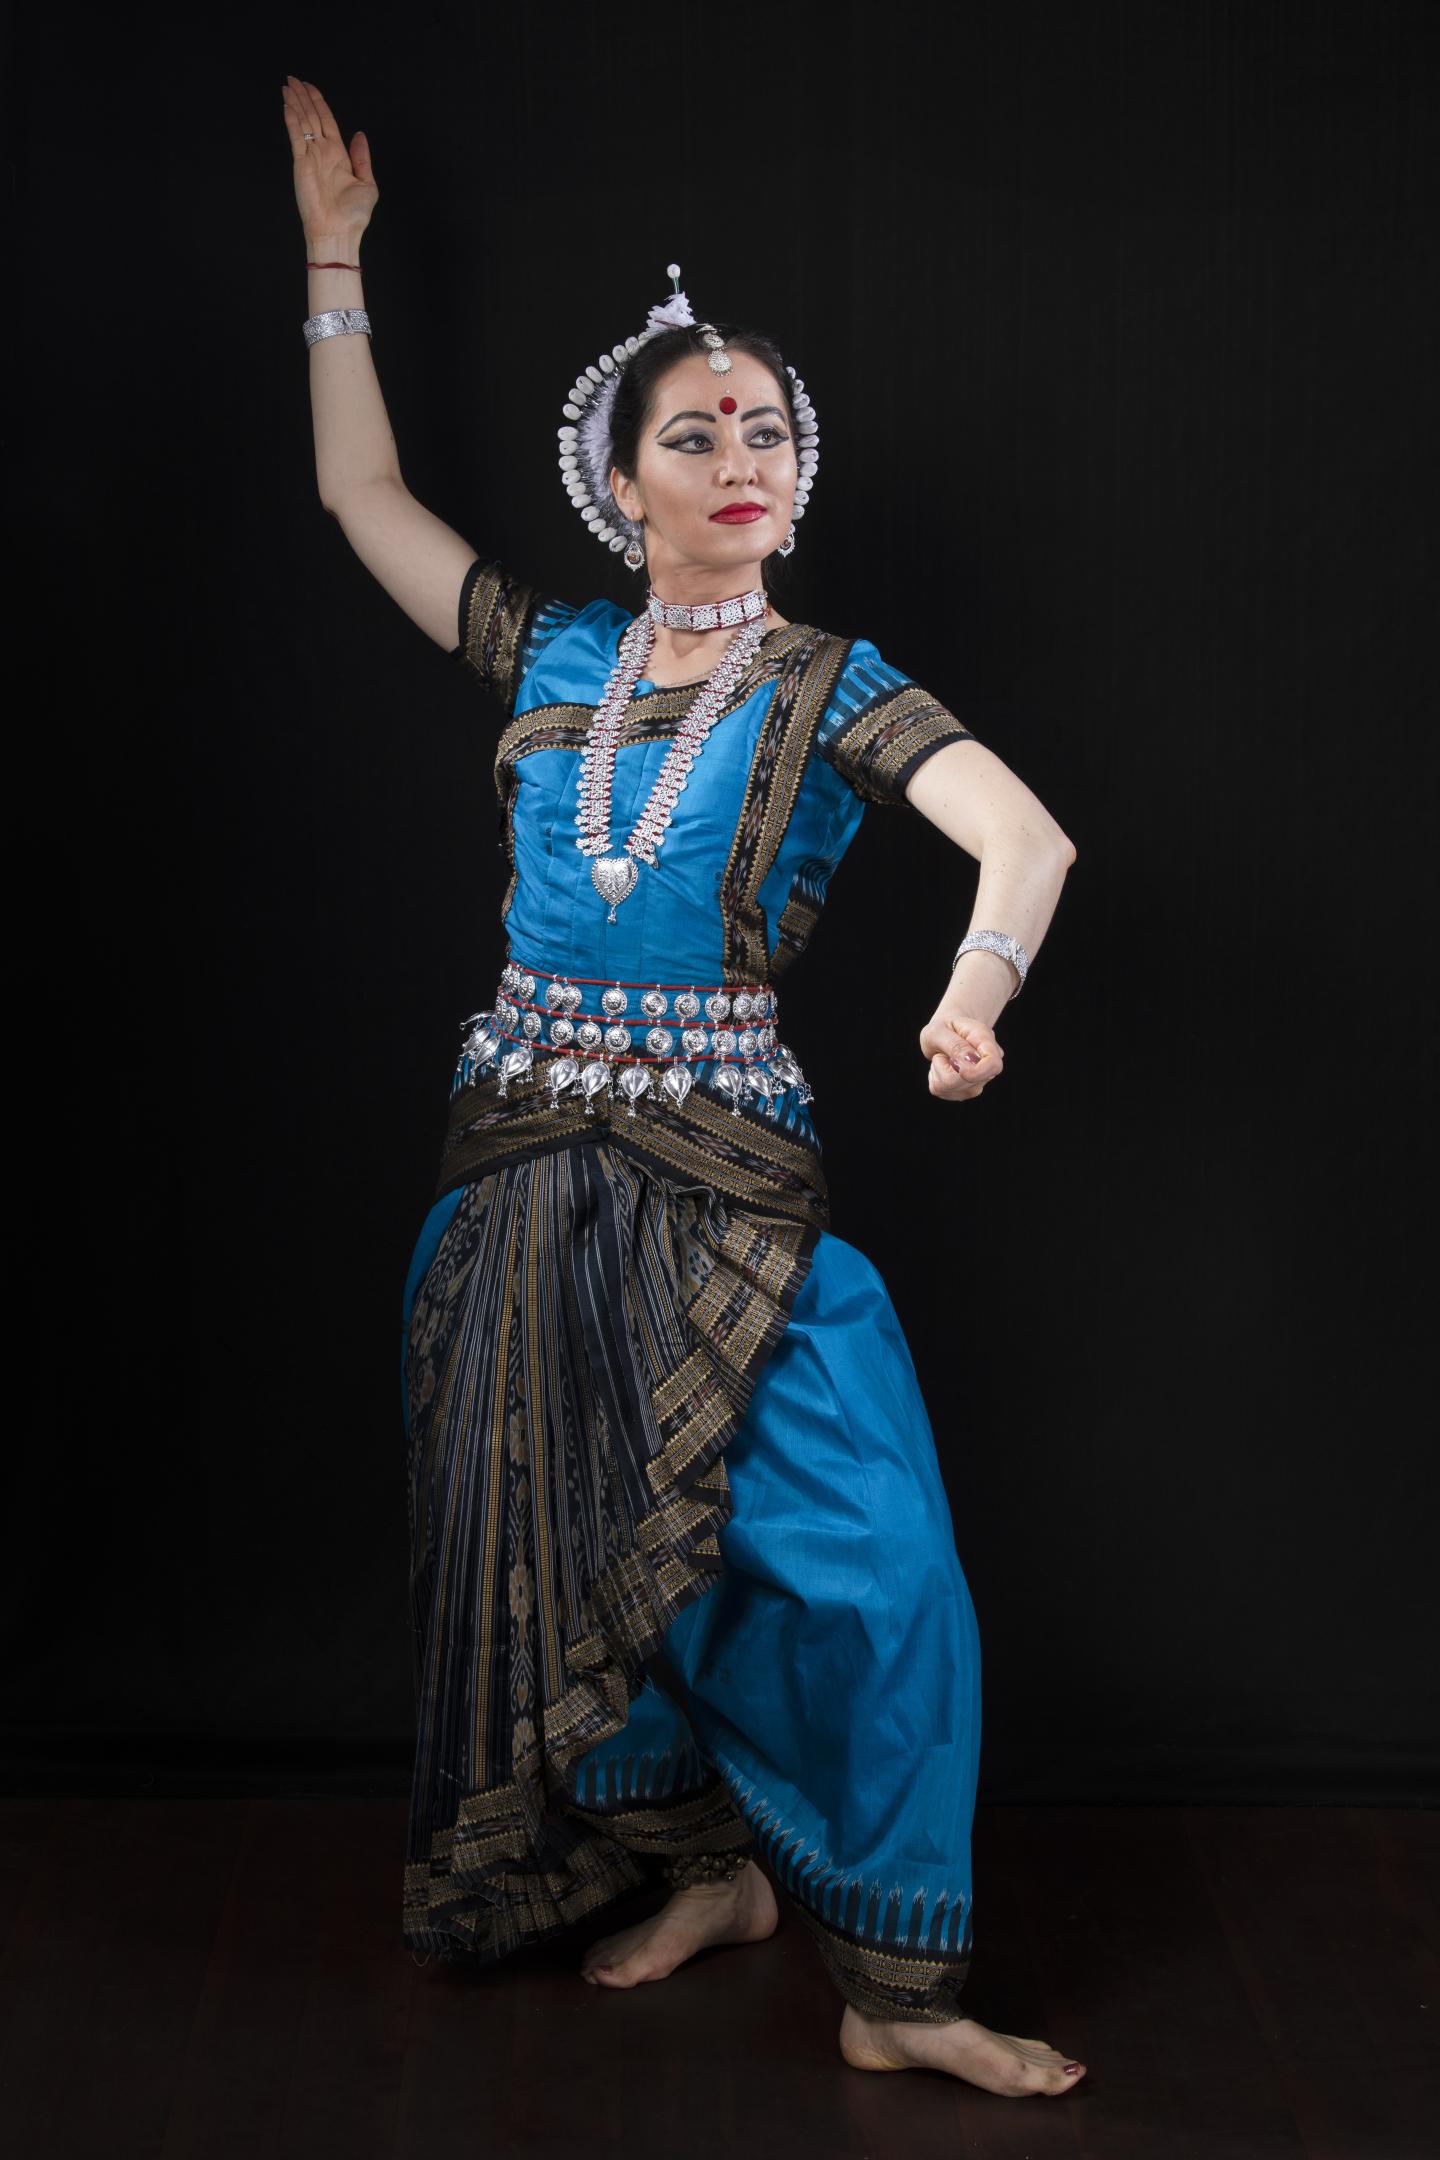 Performer from the Bhavan Gallery